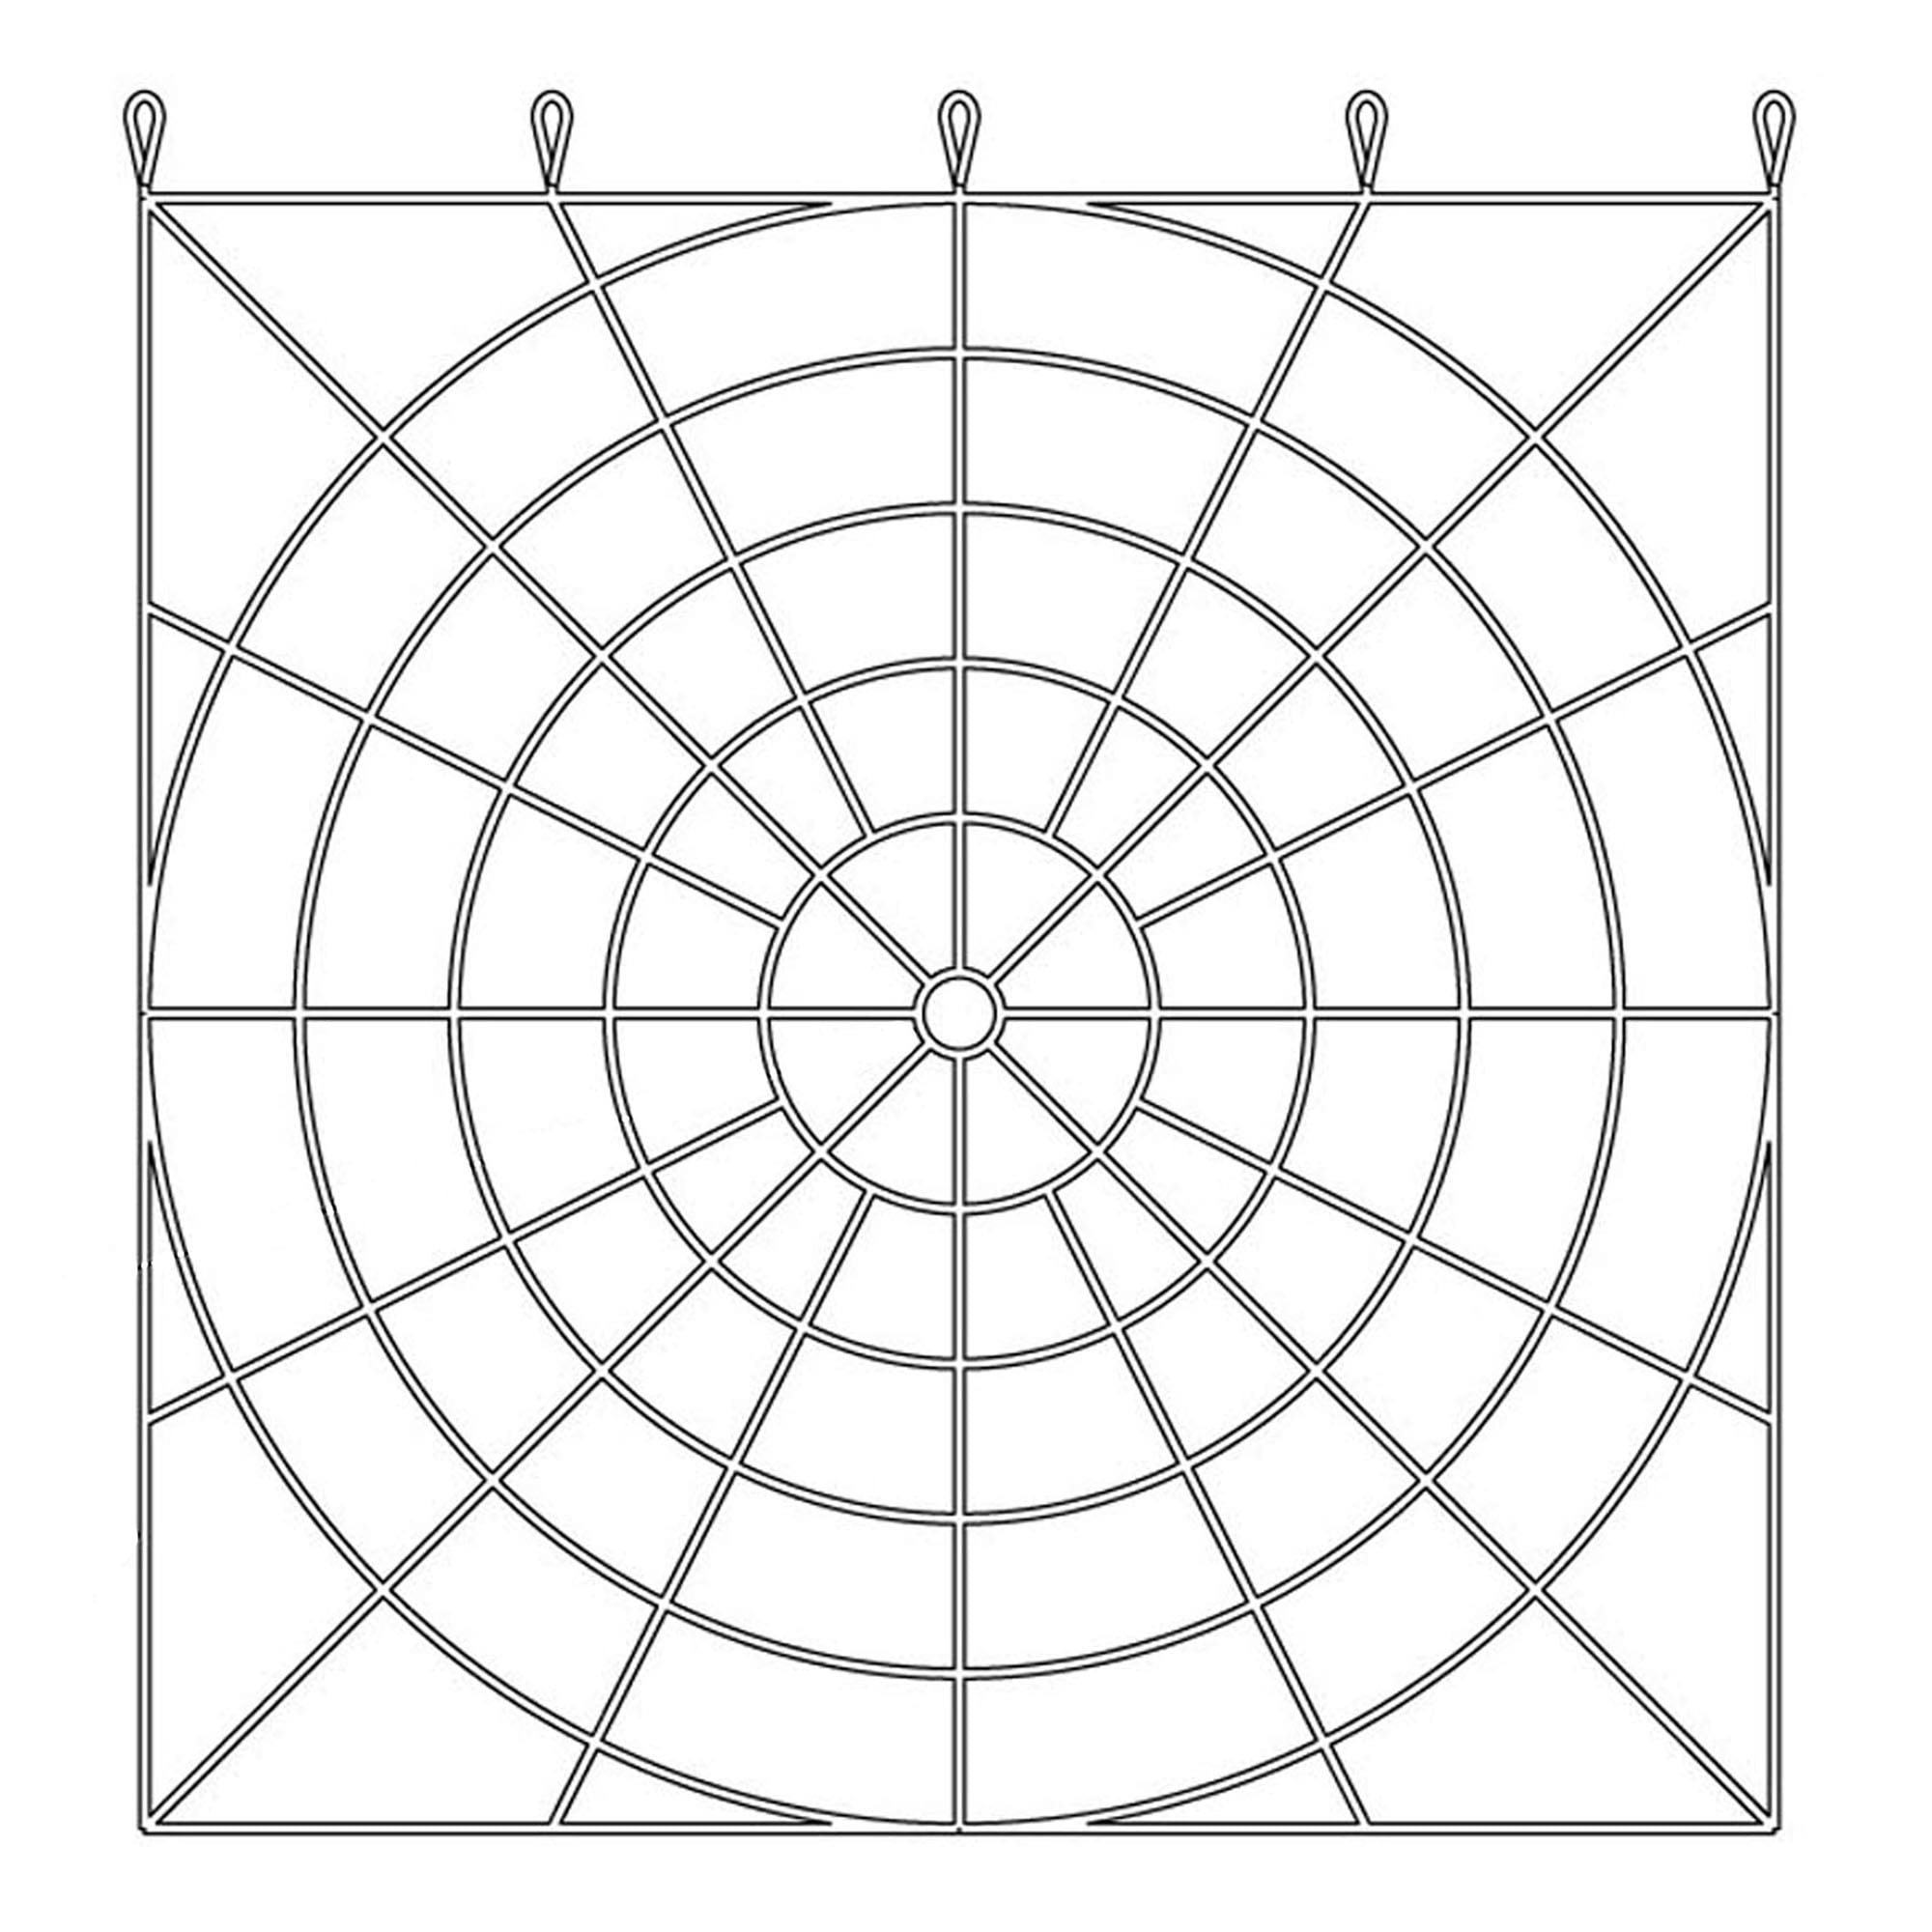 Vertical 'B' - 6" metal ring center | rope border w/ eye loops